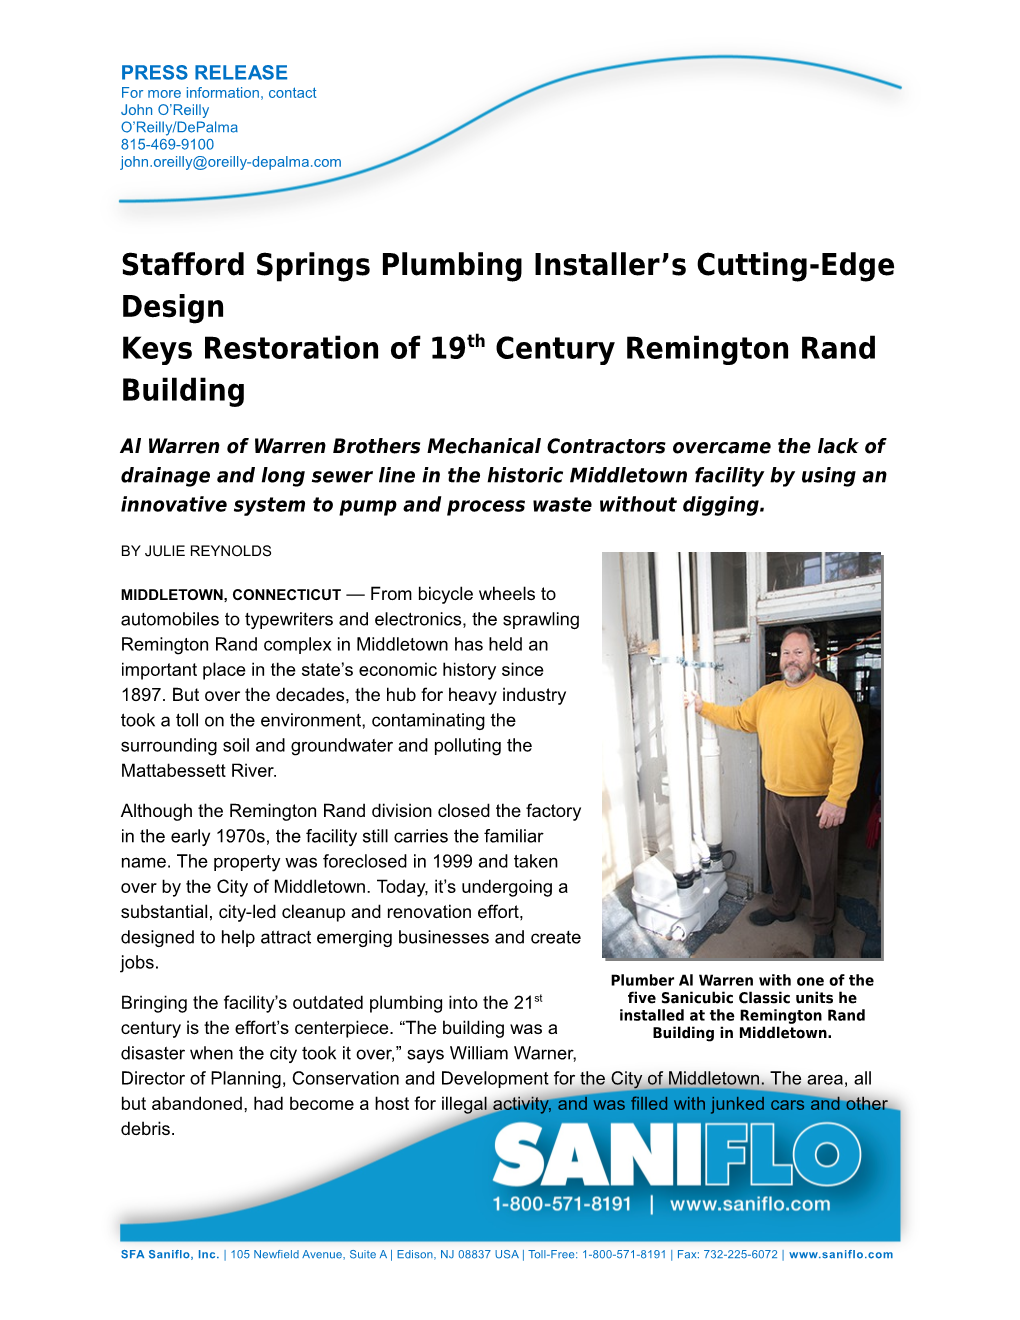 Stafford Springs Plumbing Installer S Cutting-Edge Design